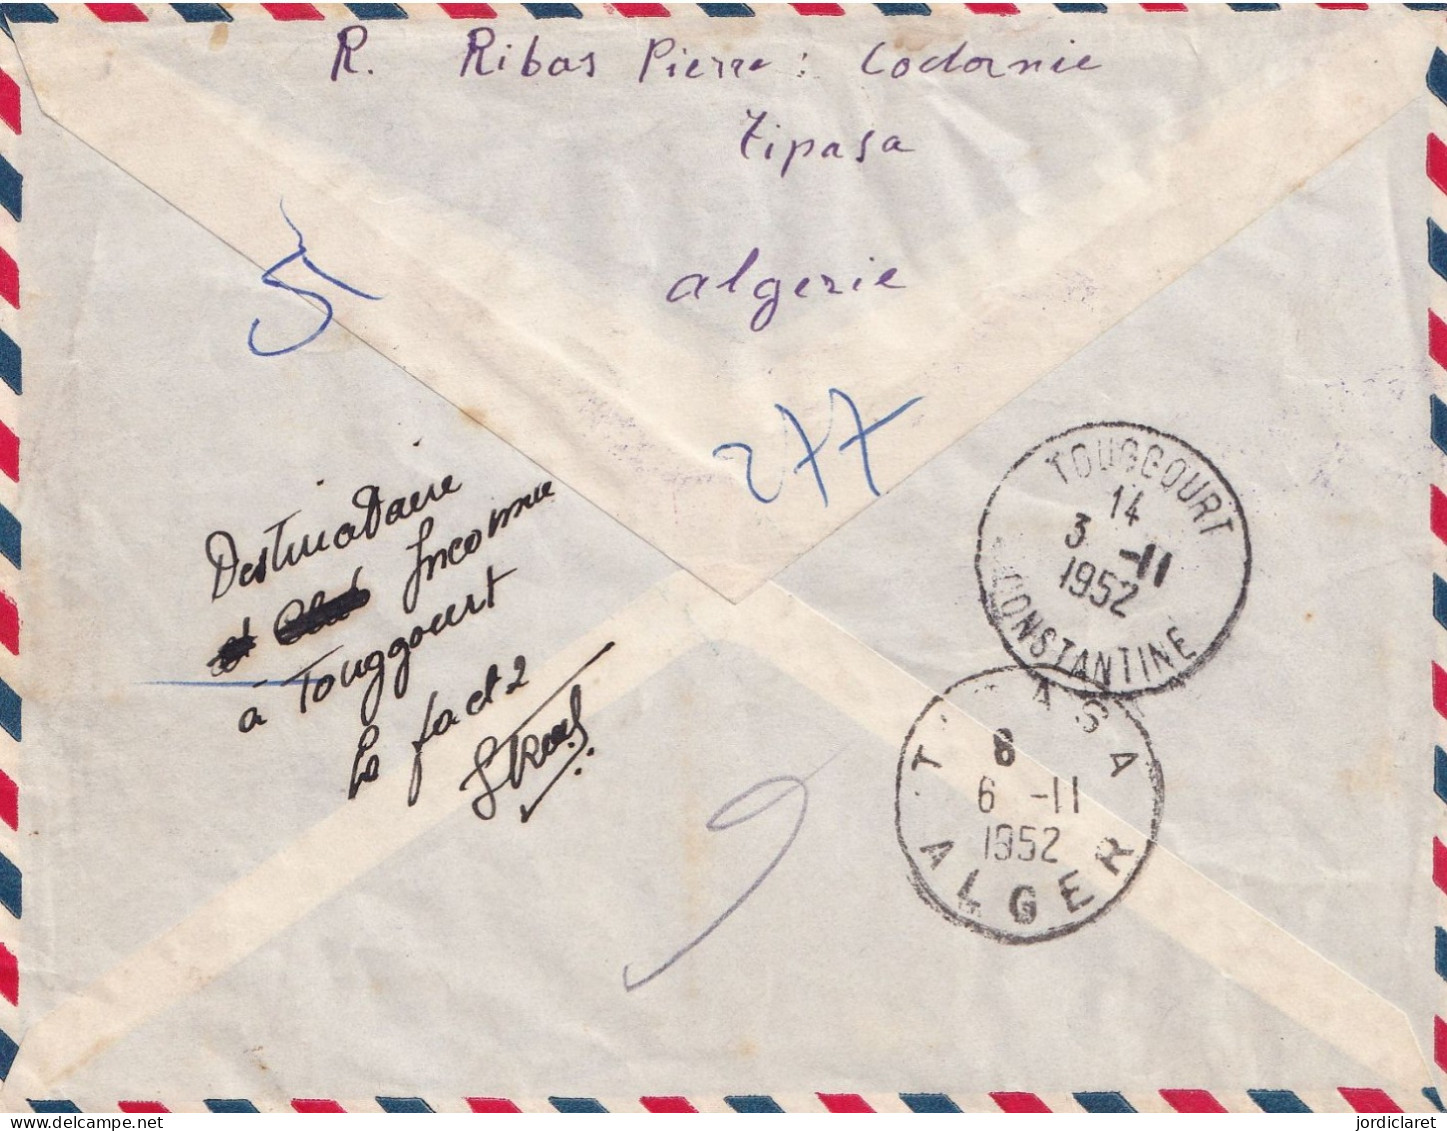 FIRST FLIGHT 1952  RECOMANDEE TIPASA  ALGER-BISKRA-TOOGOURT - Lettres & Documents